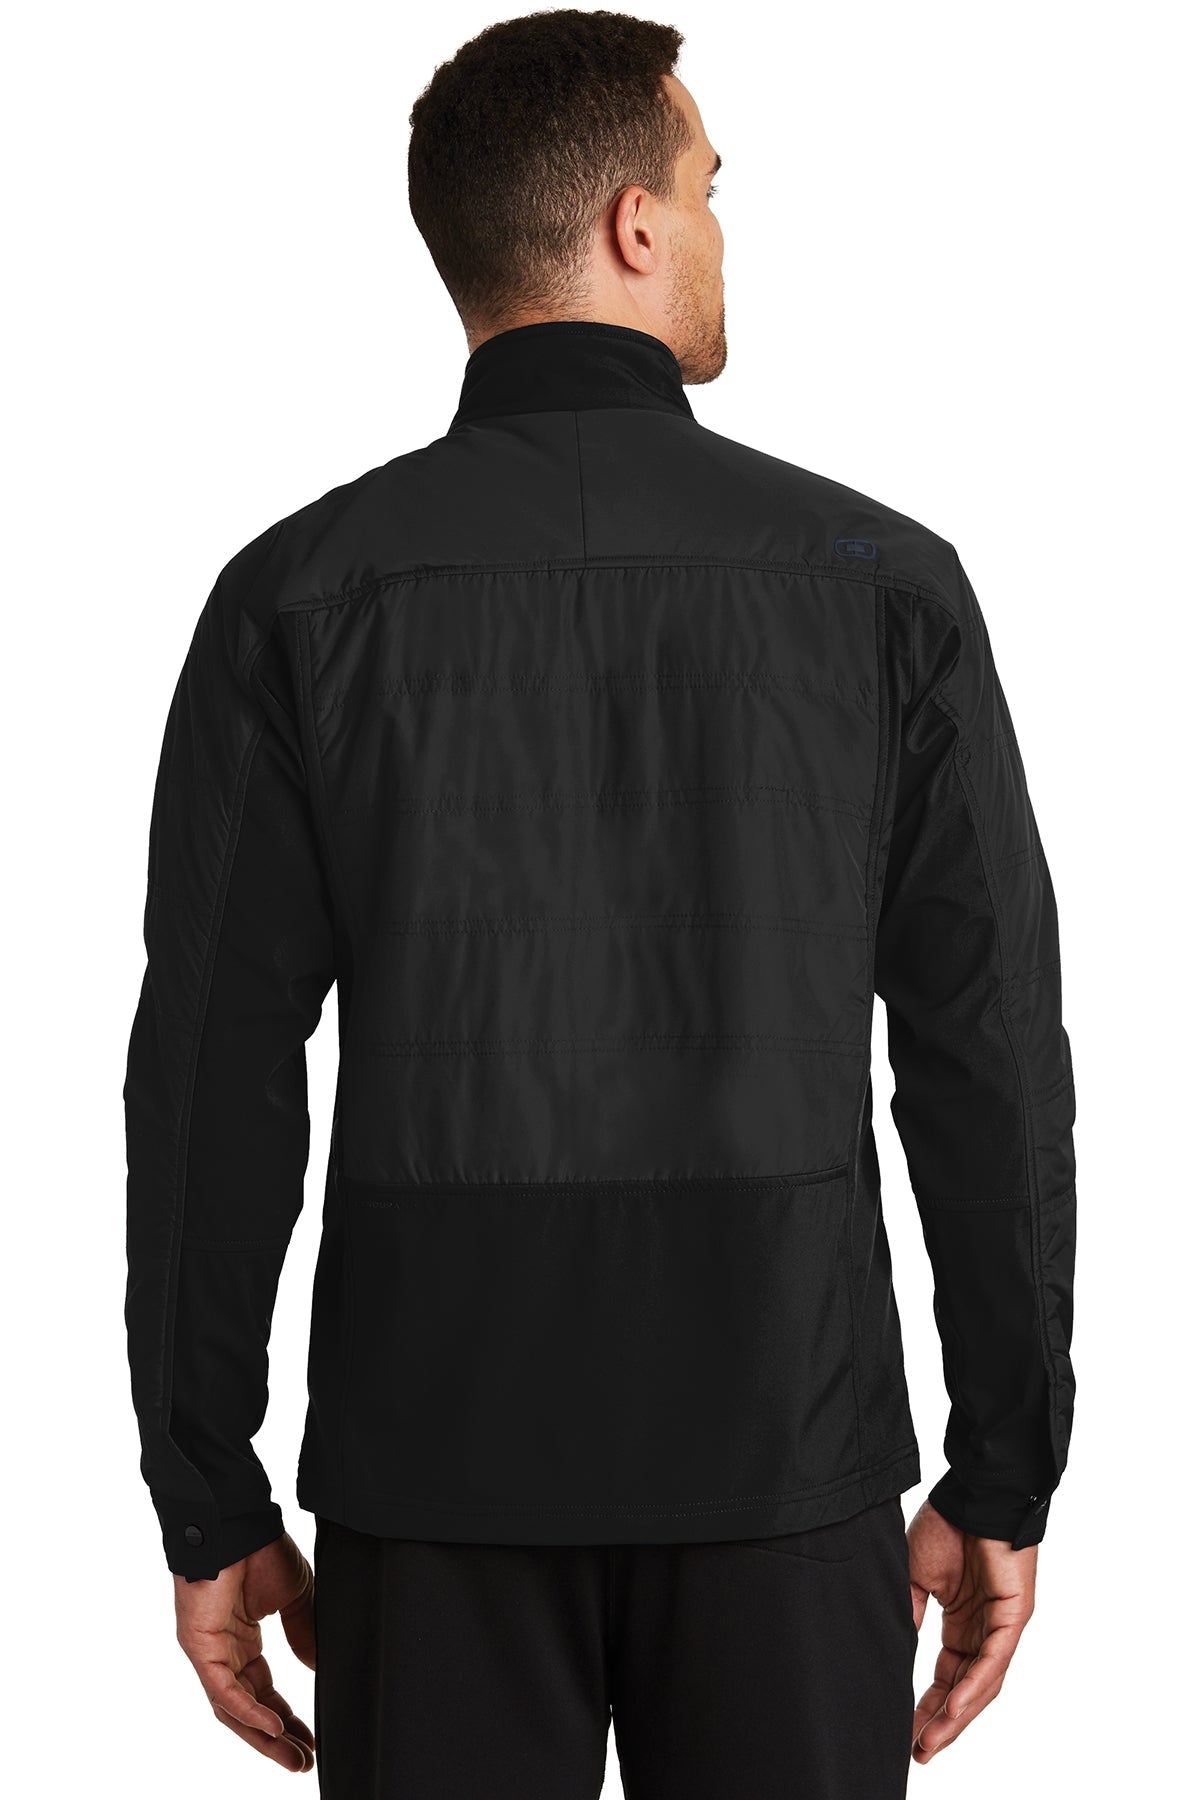 ogio endurance_oe722 _blacktop_company_logo_jackets